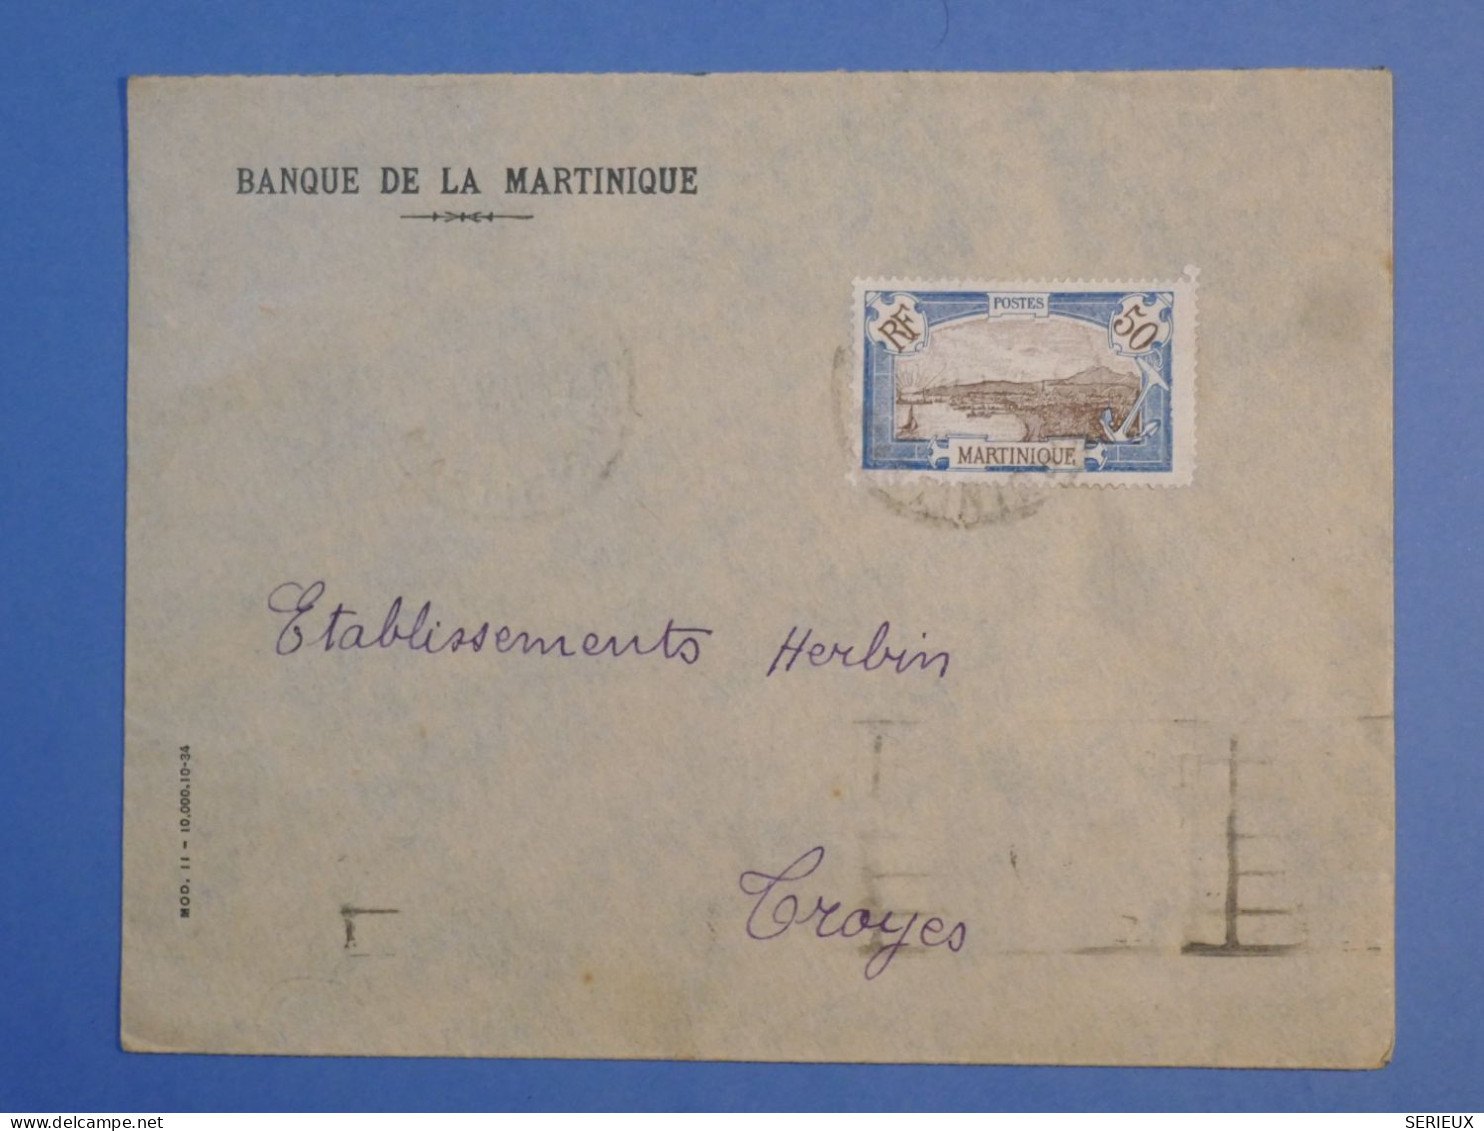 DK 12 MARTINIQUE   BELLE LETTRE    BANQUE 1935 A TROYES  FRANCE ++AFF. INTERESSANT++++ + - Storia Postale